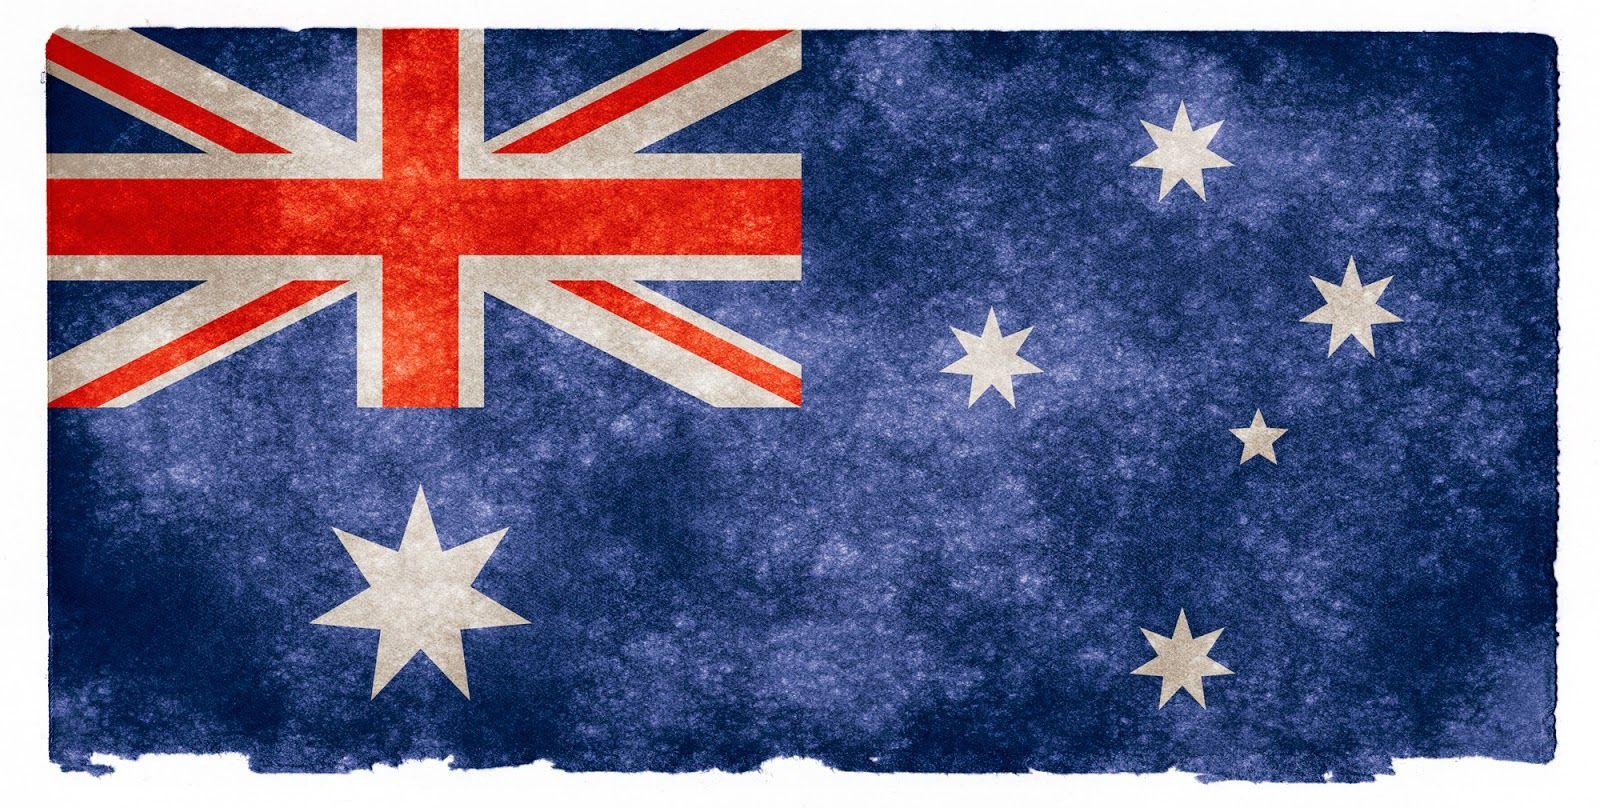 Wallpapers - Top Australian Flag Backgrounds - WallpaperAccess